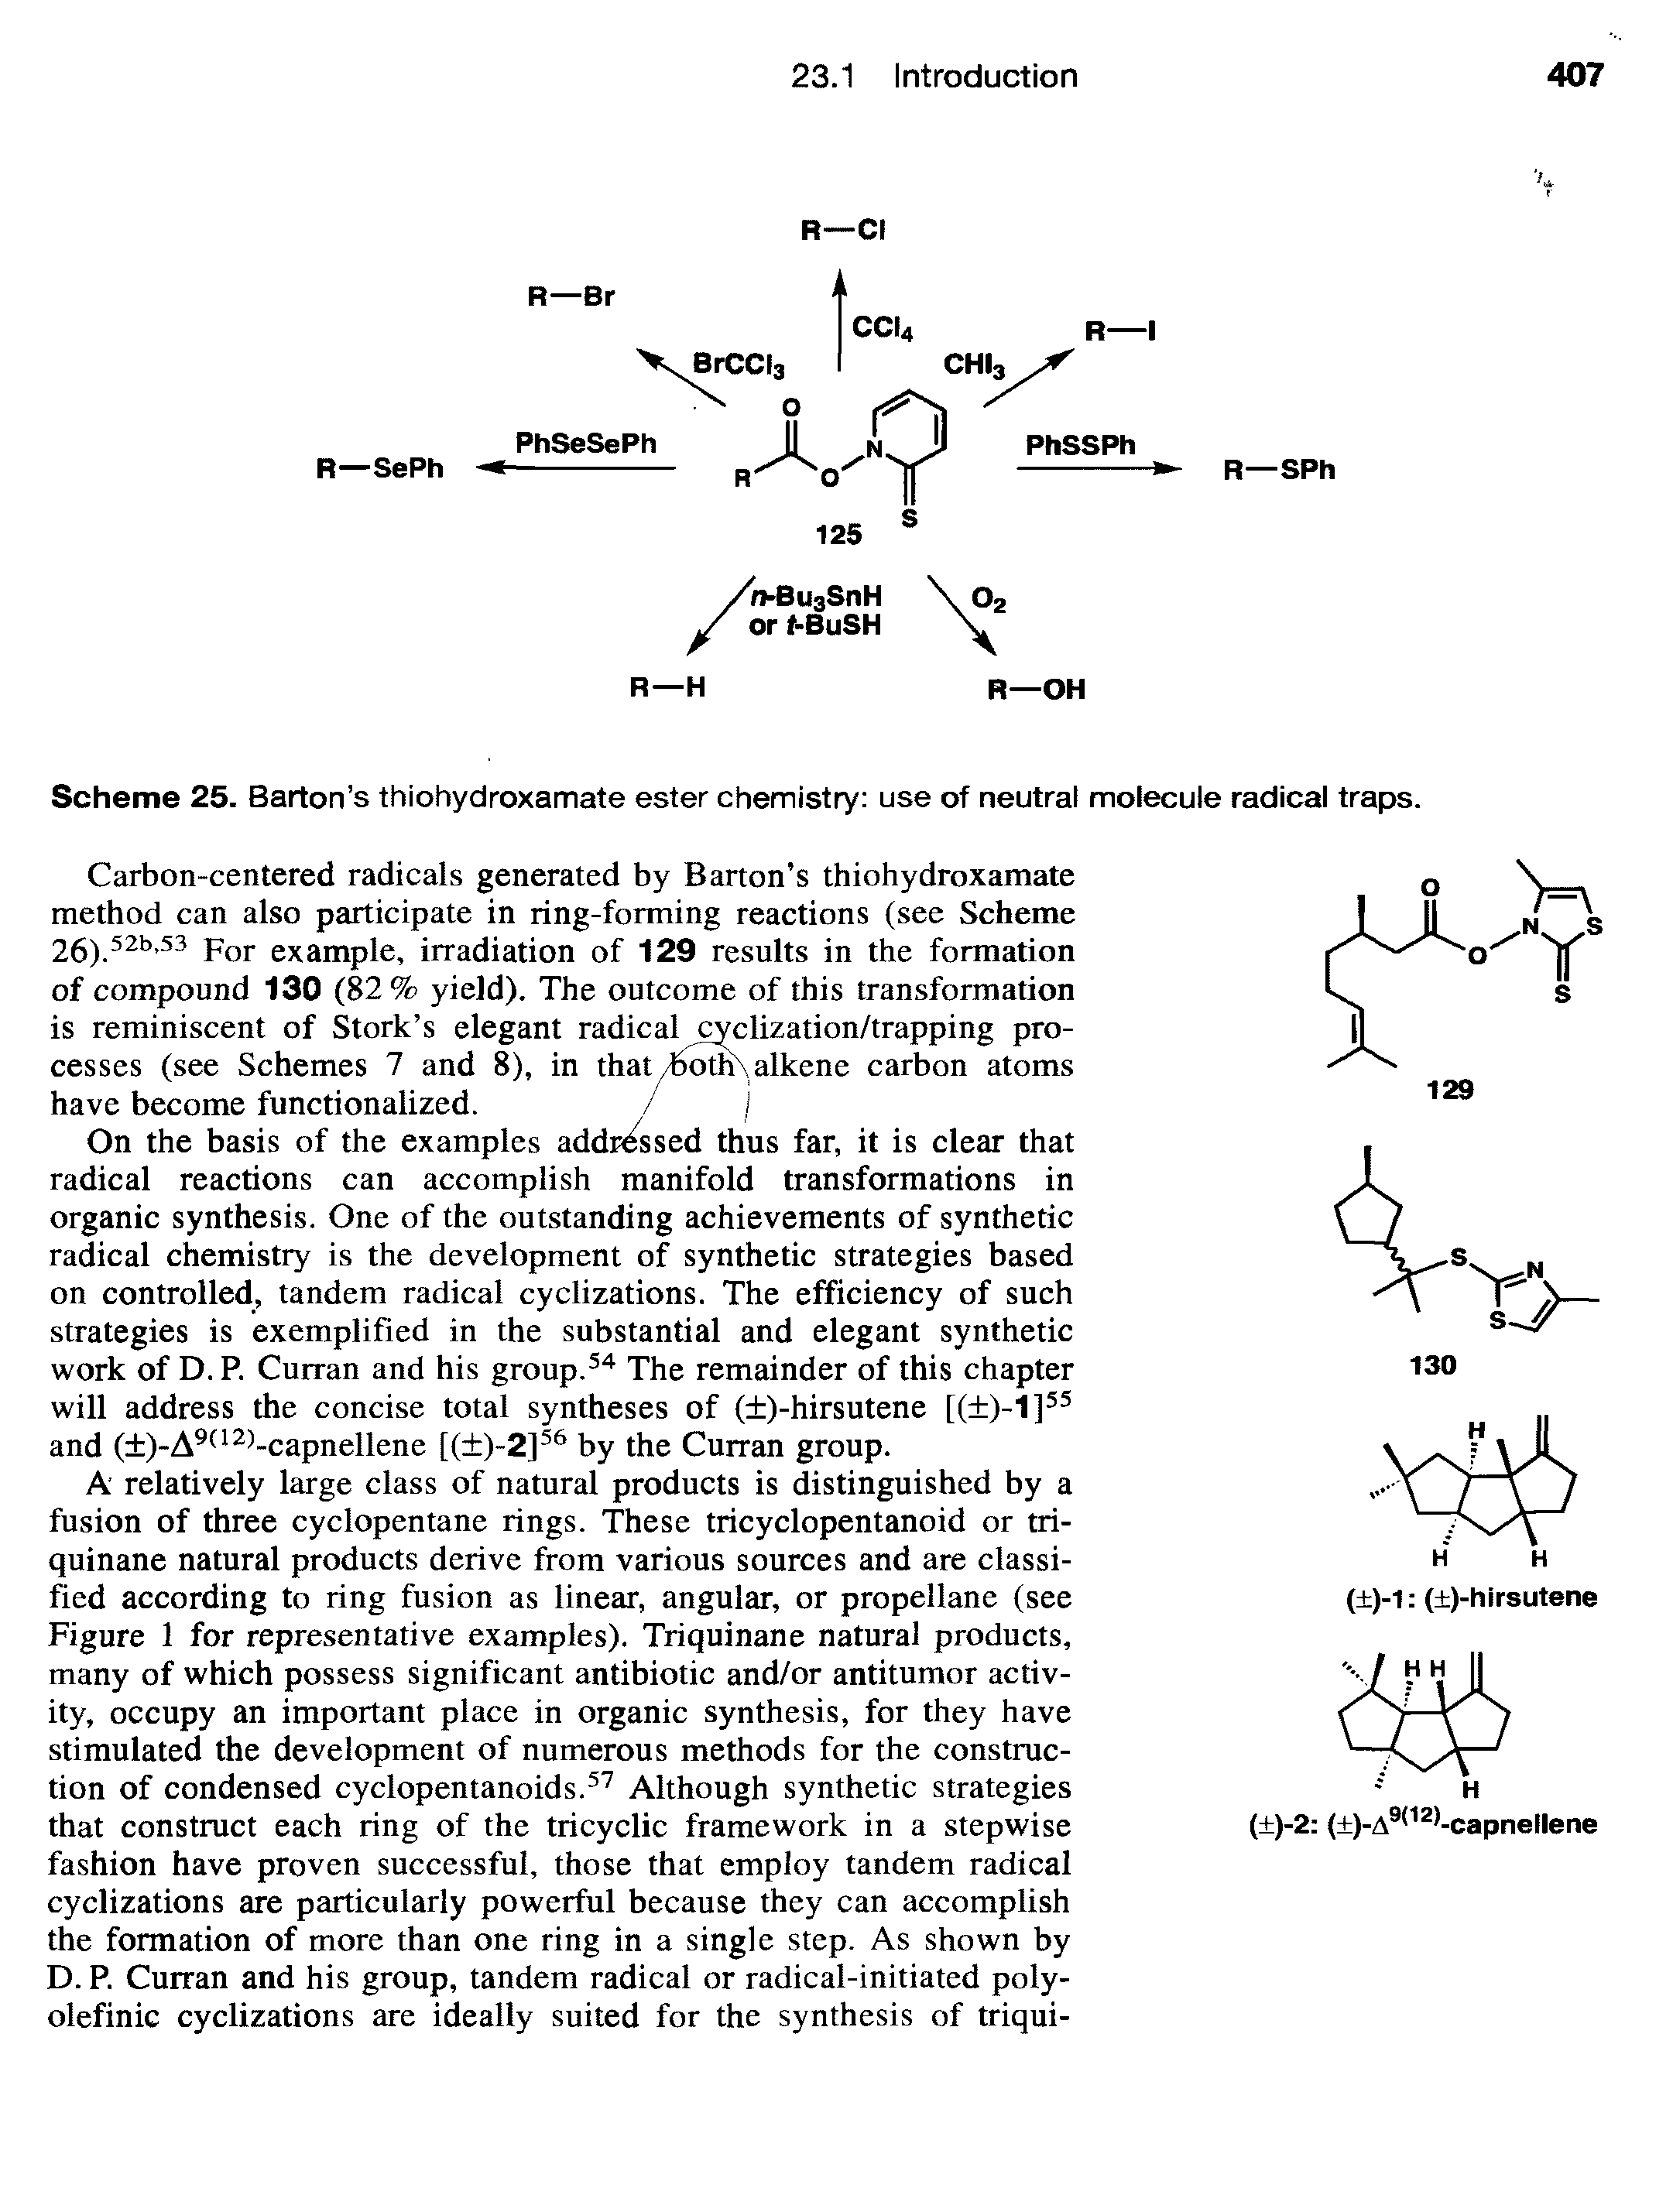 Scheme 25. Barton s thiohydroxamate ester chemistry use of neutral molecule radical traps.